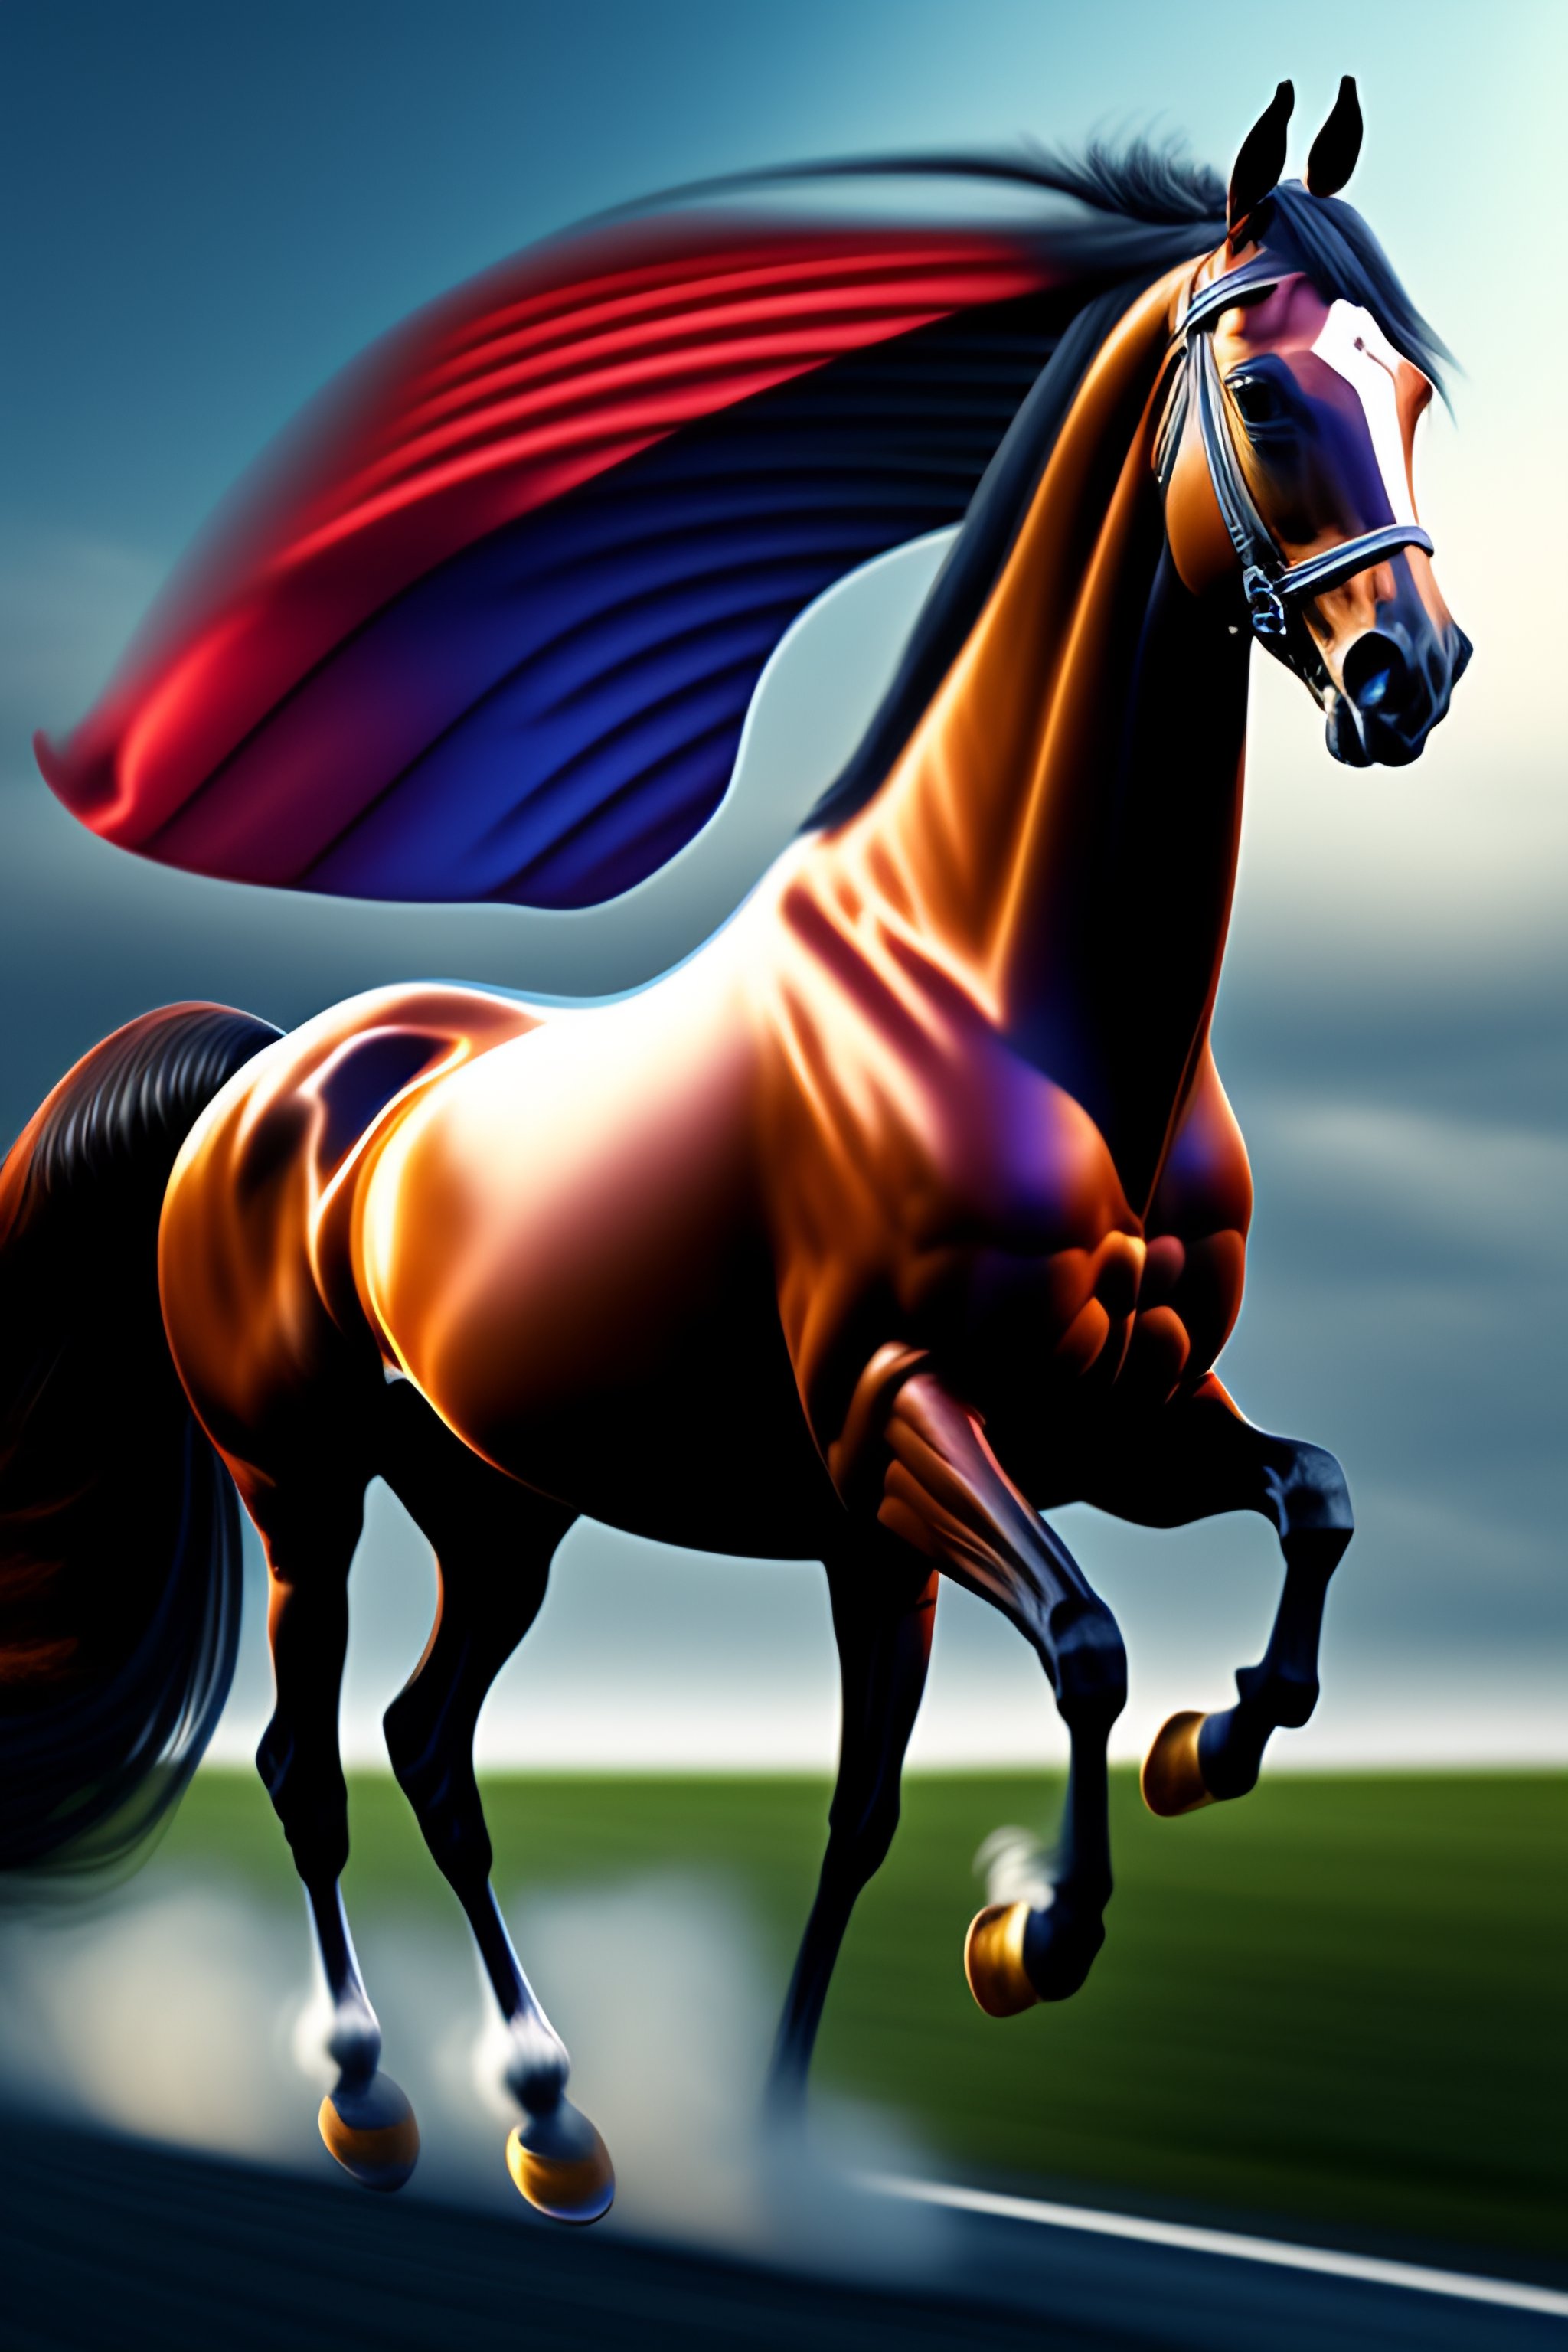 flying horse wallpaper hd